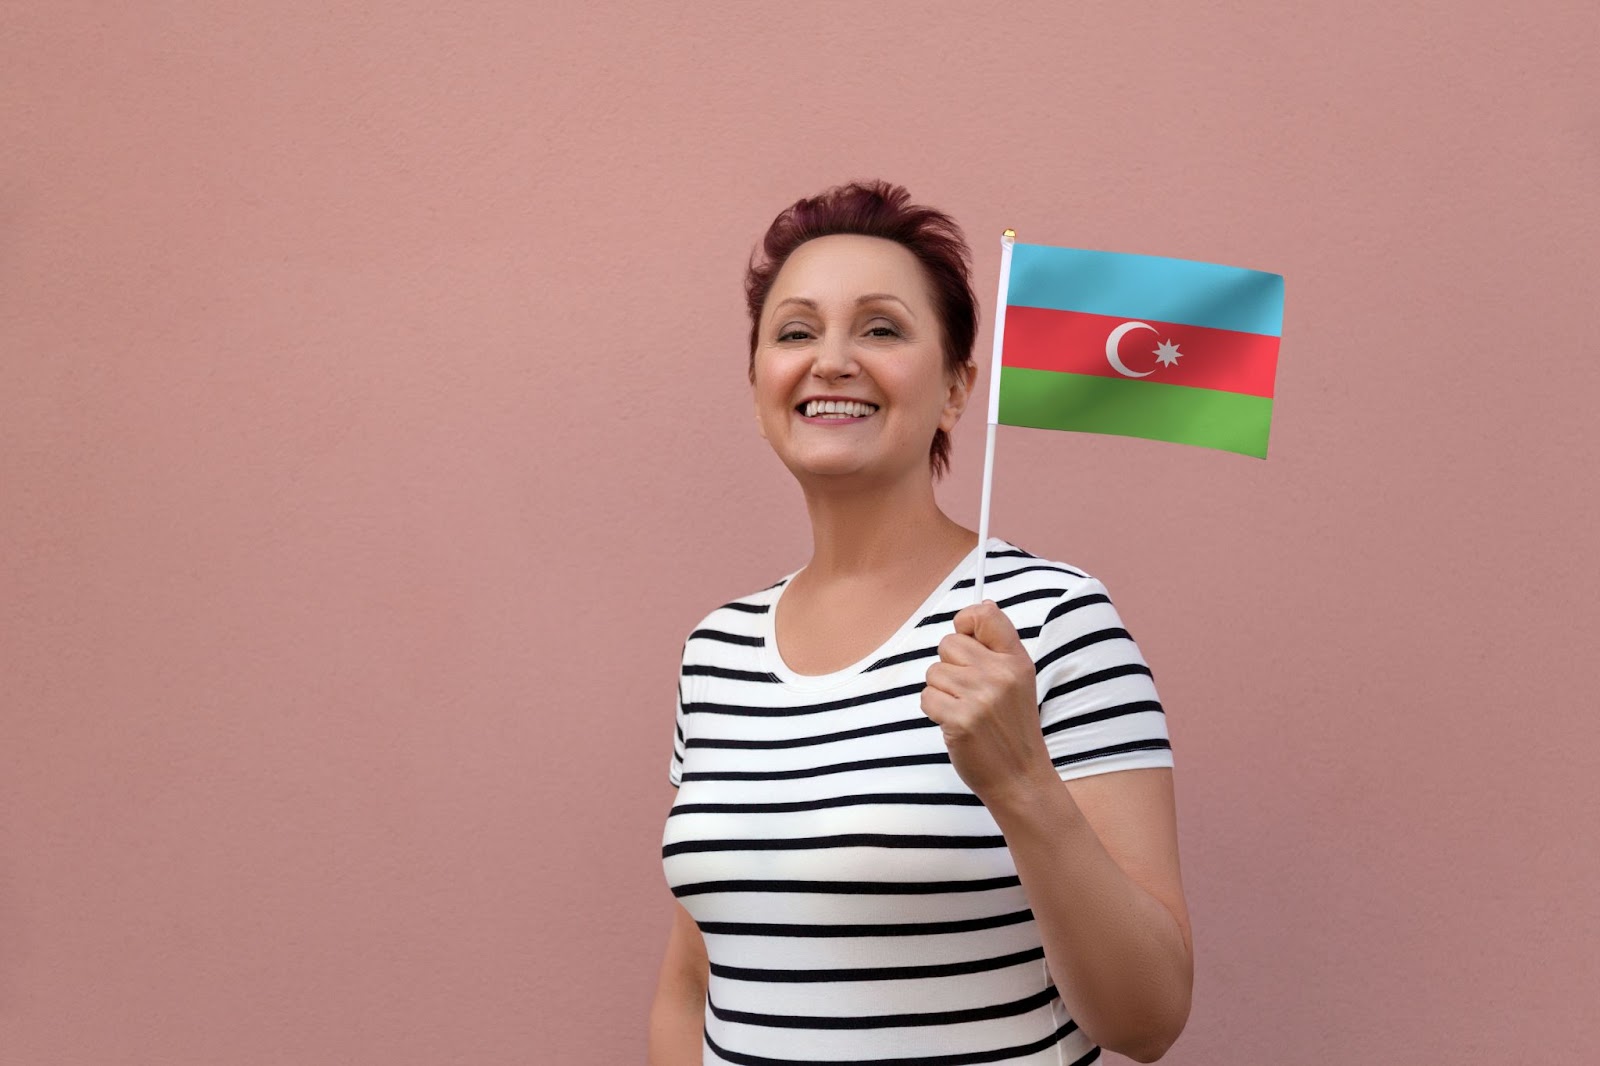 Azerbaycan bayrağı tutan kadın dil öğrenme kavramı